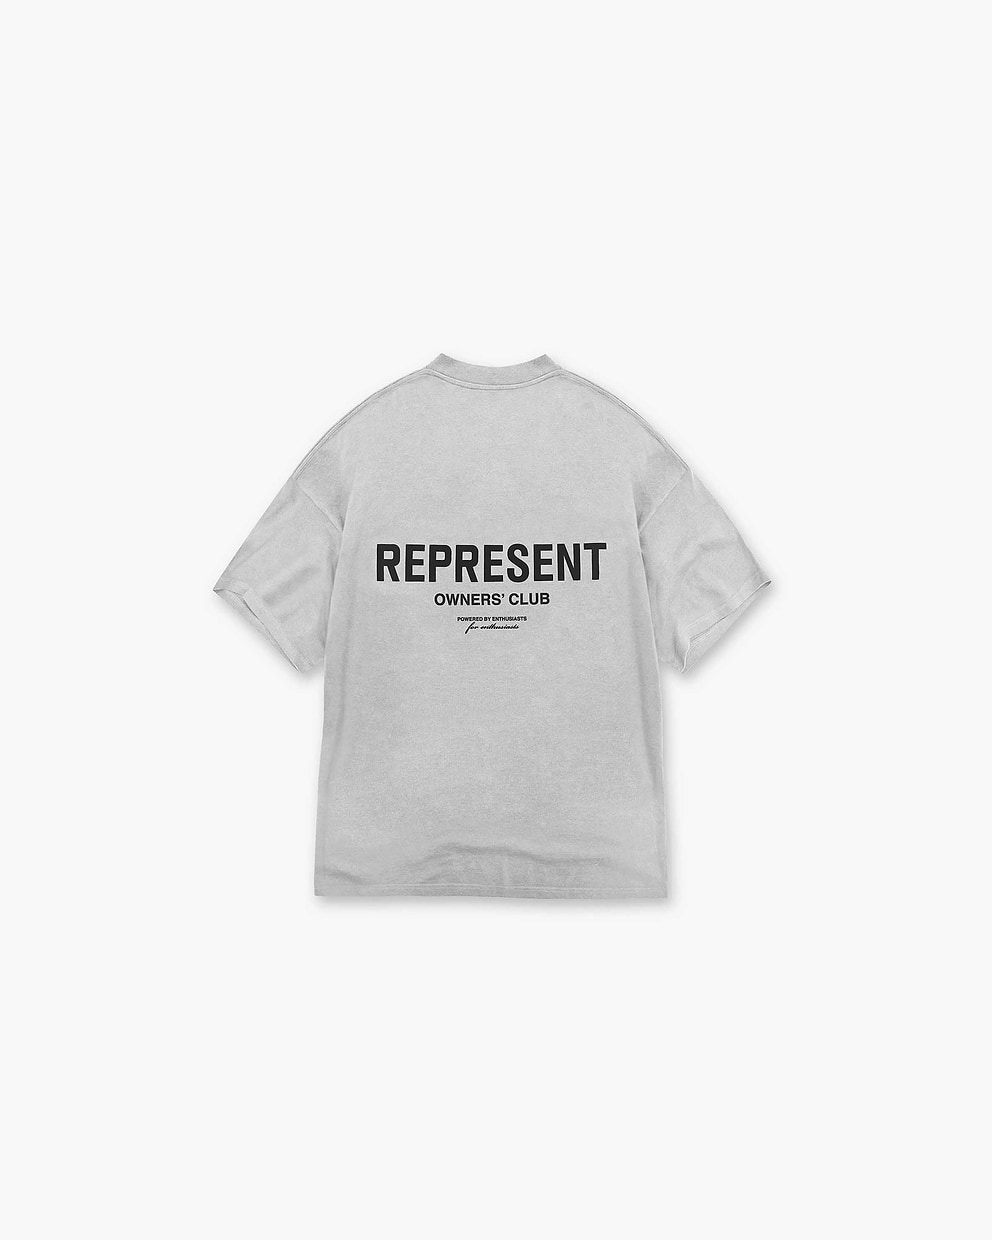 Represent Owners Club T-Shirt - Ash Grey